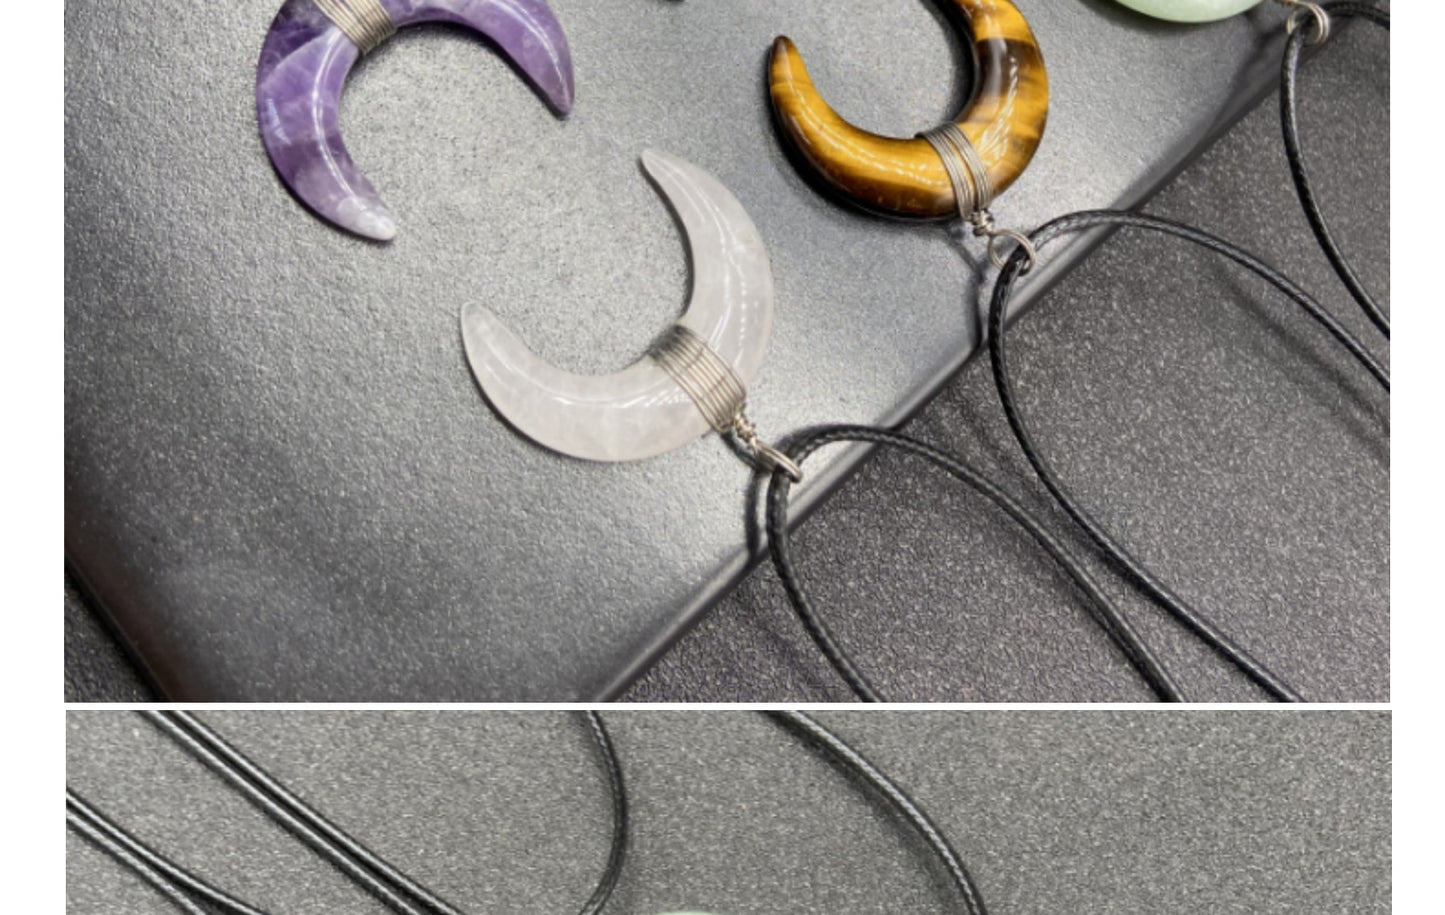 Fashion Moon Crystal Polishing Pendant Necklace 1 Piece